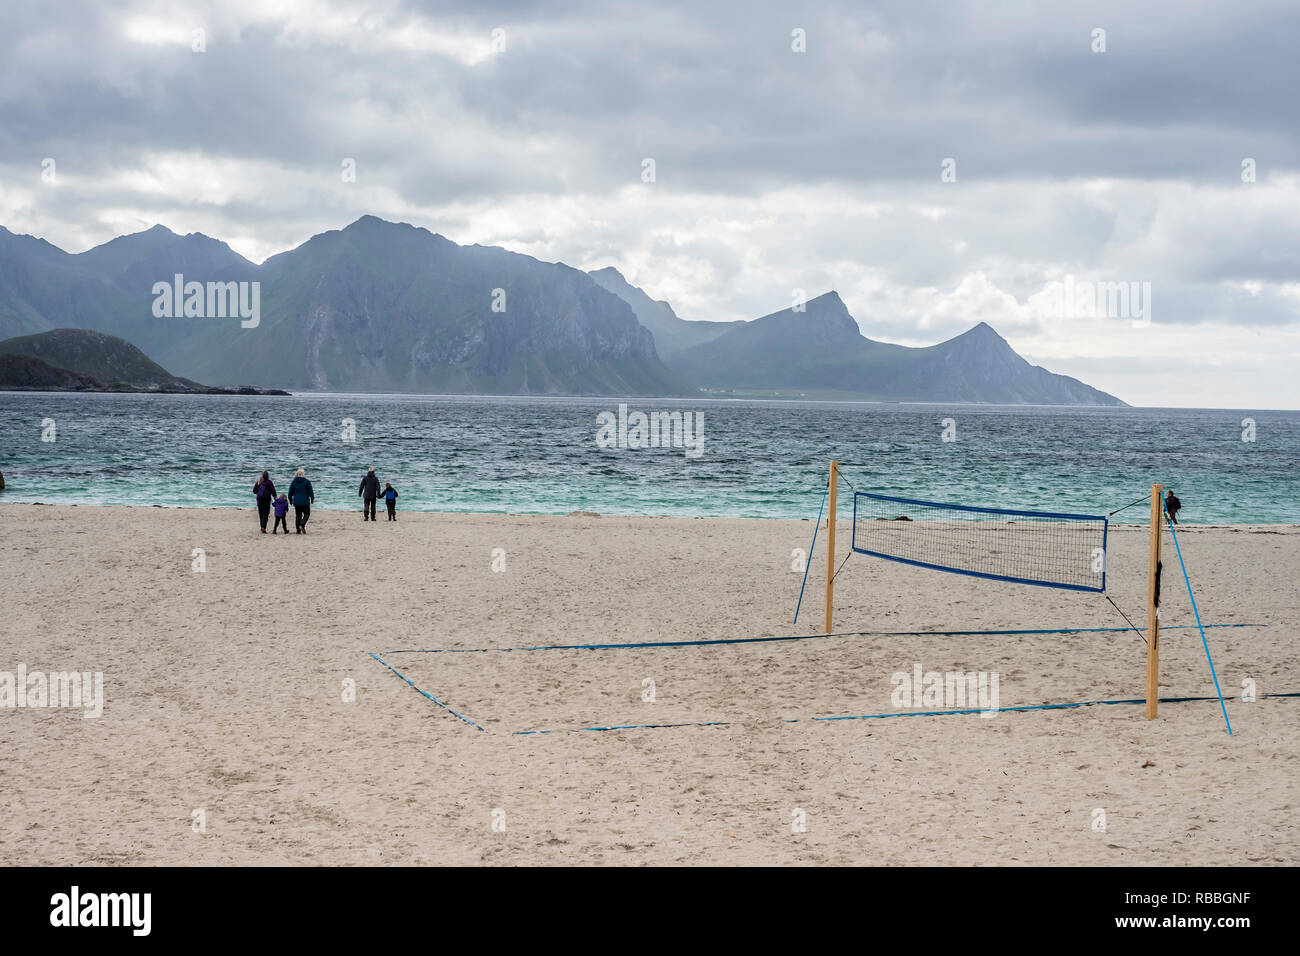 Hauklandstranda, Haukland beach, plage de sable fin, filet de volley-ball, beachvolleyball, île de Vestvagöy, Lofoten, Norvège Banque D'Images